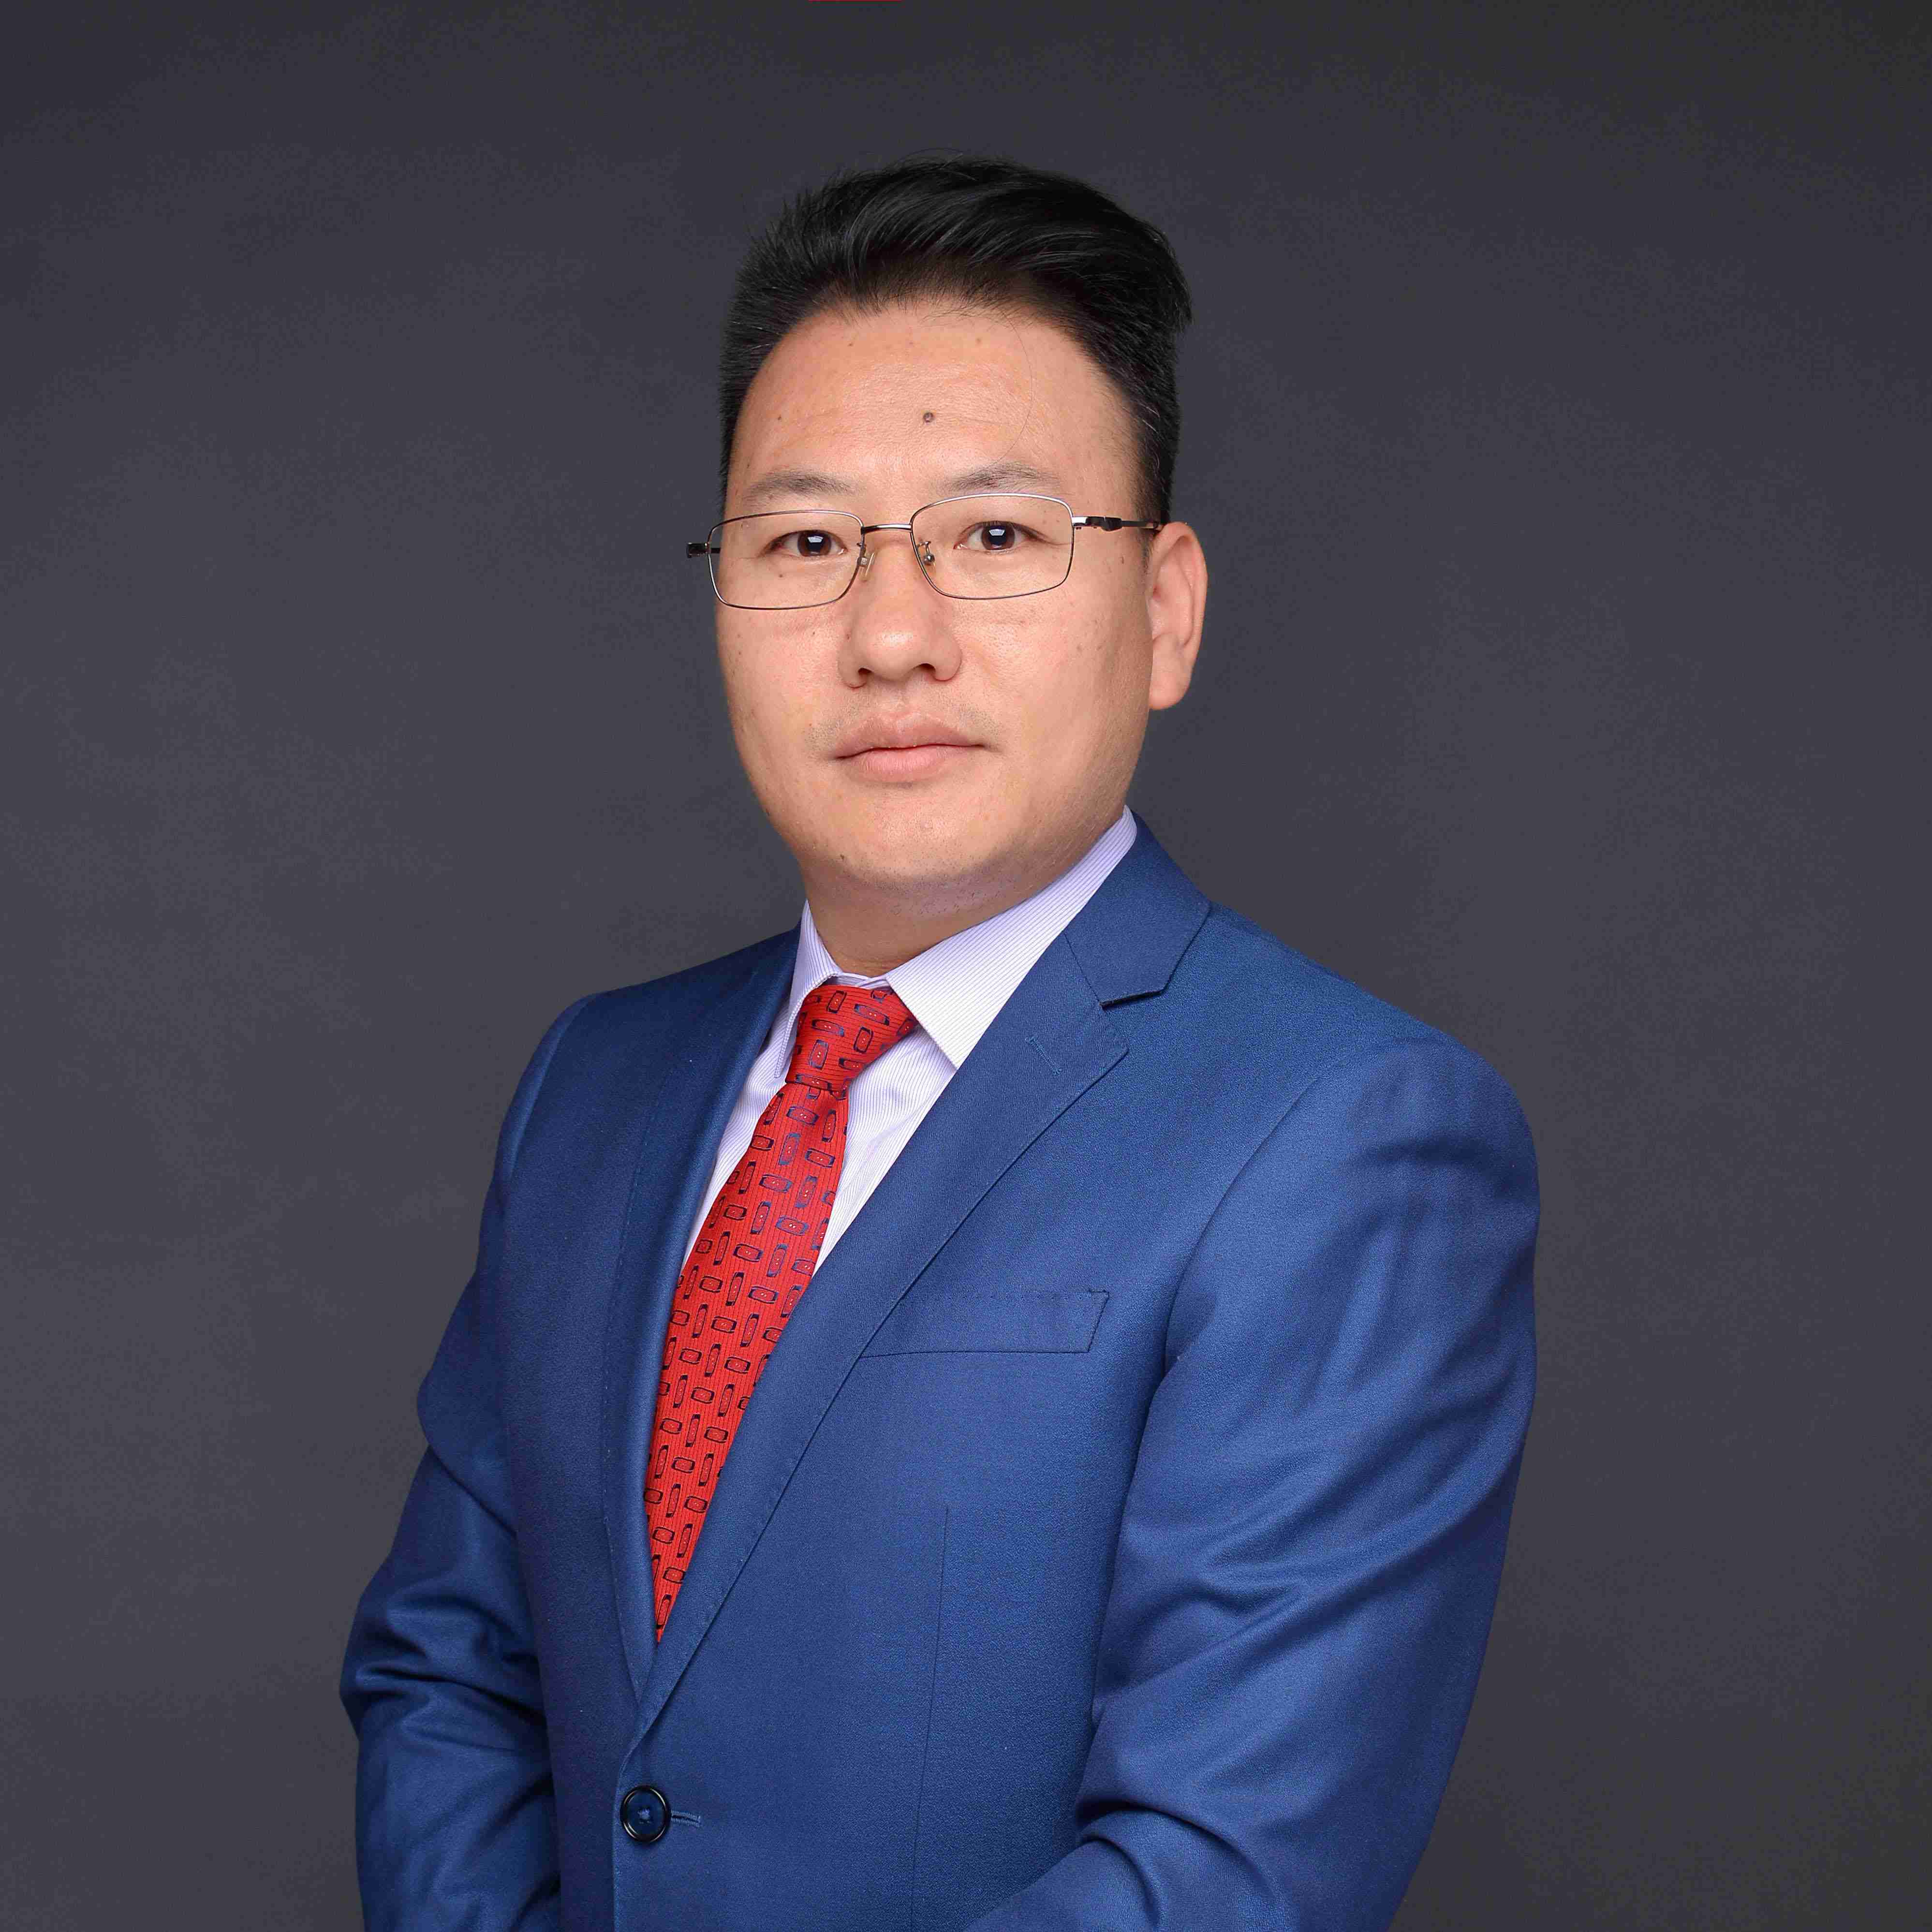 Profile image of Dr Zhibao Mian